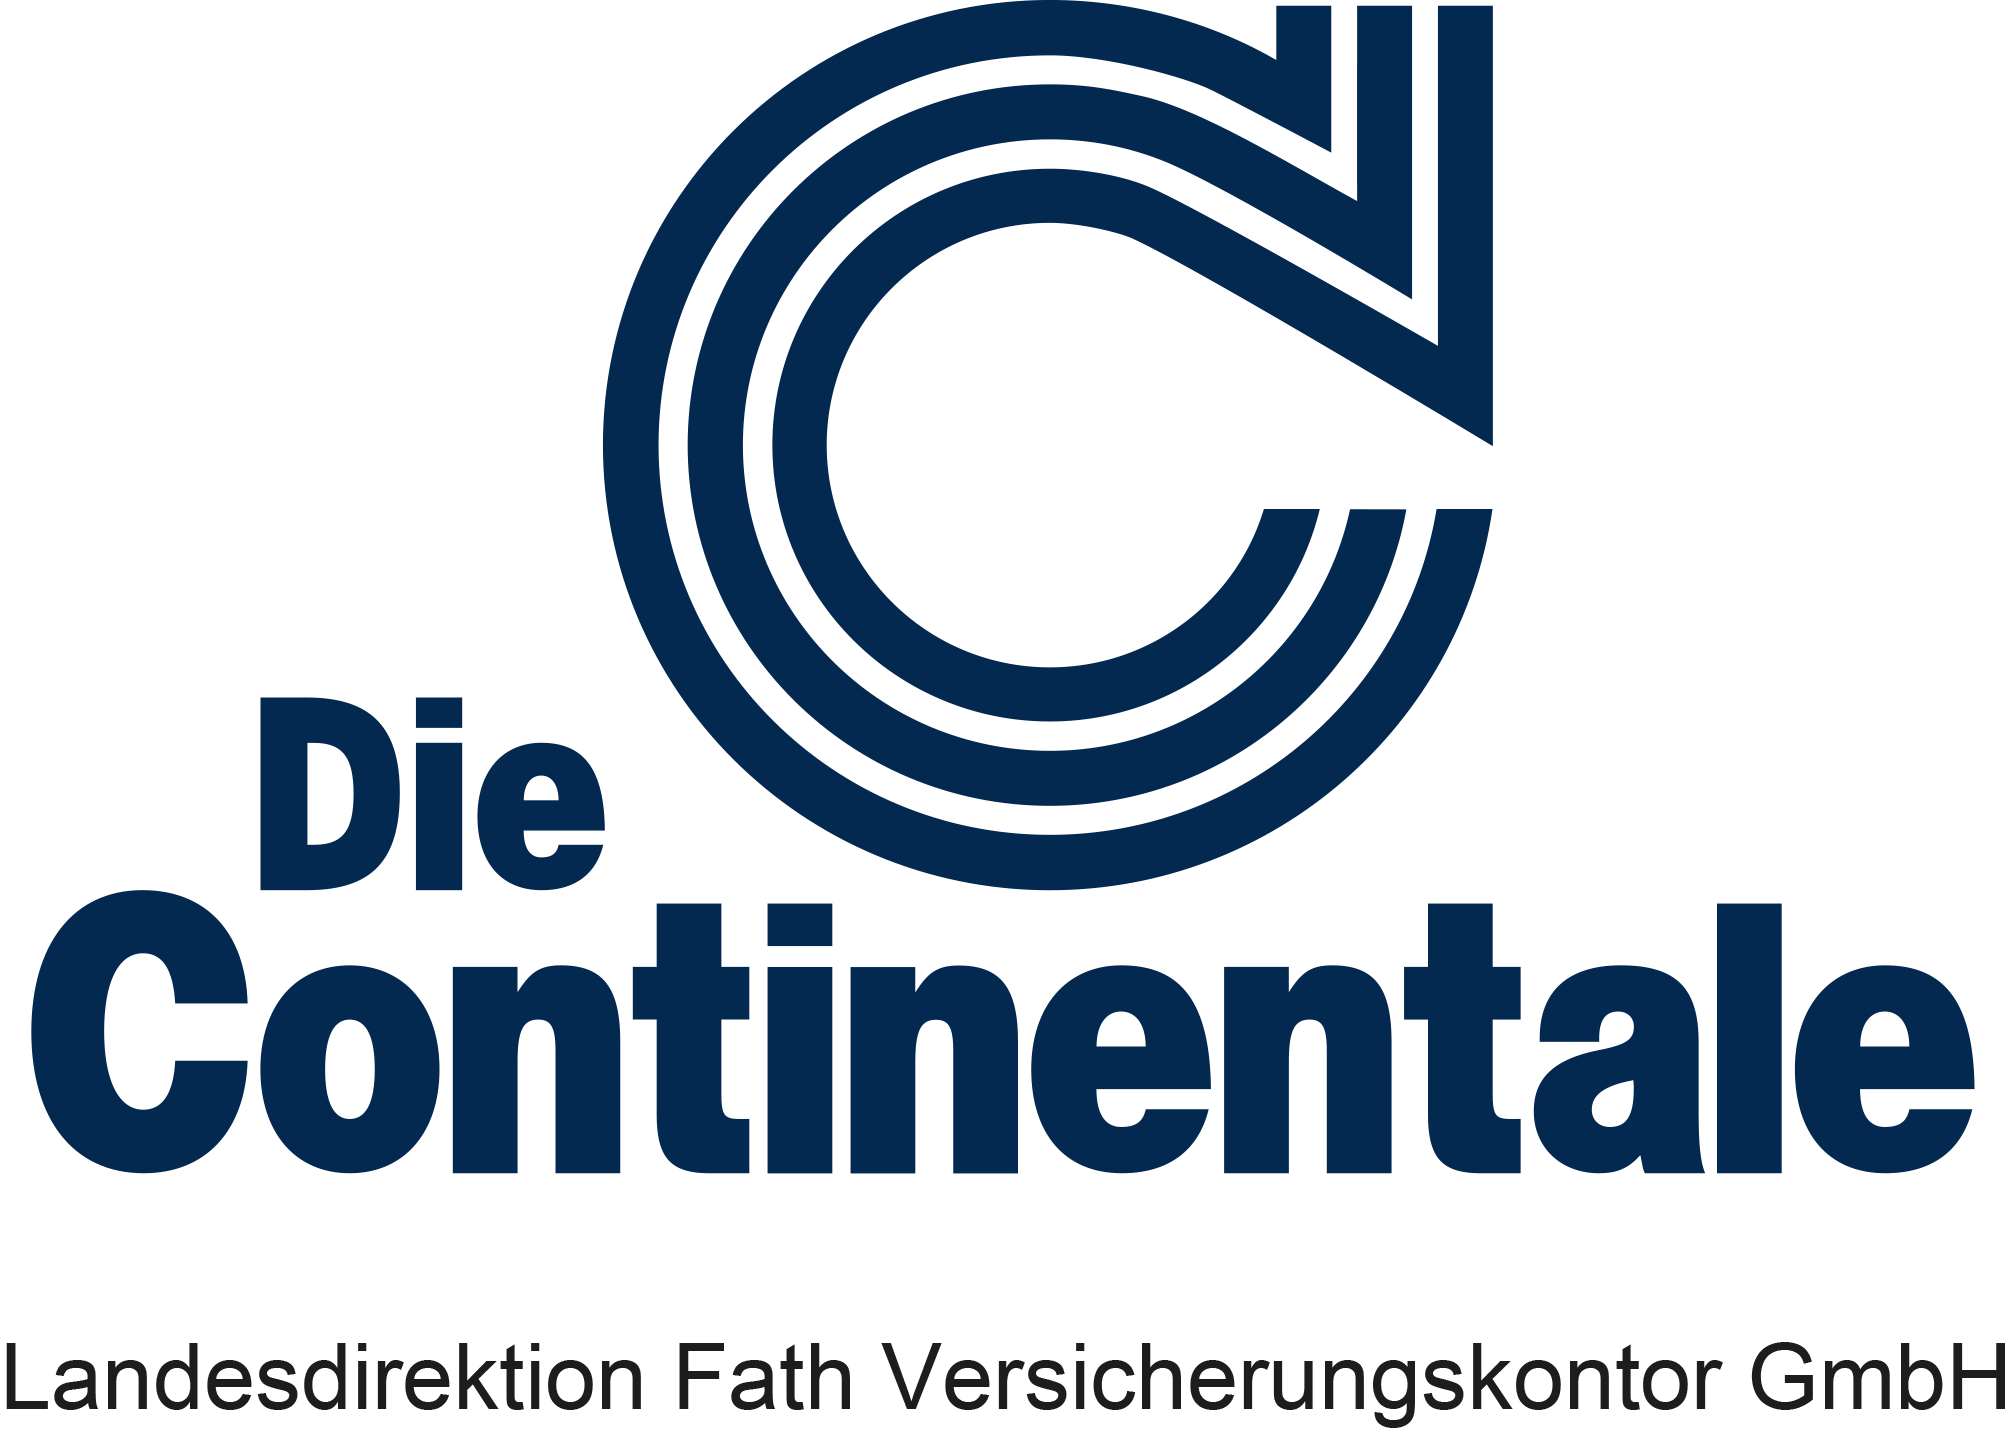 Continentale Landesdirektion Fath